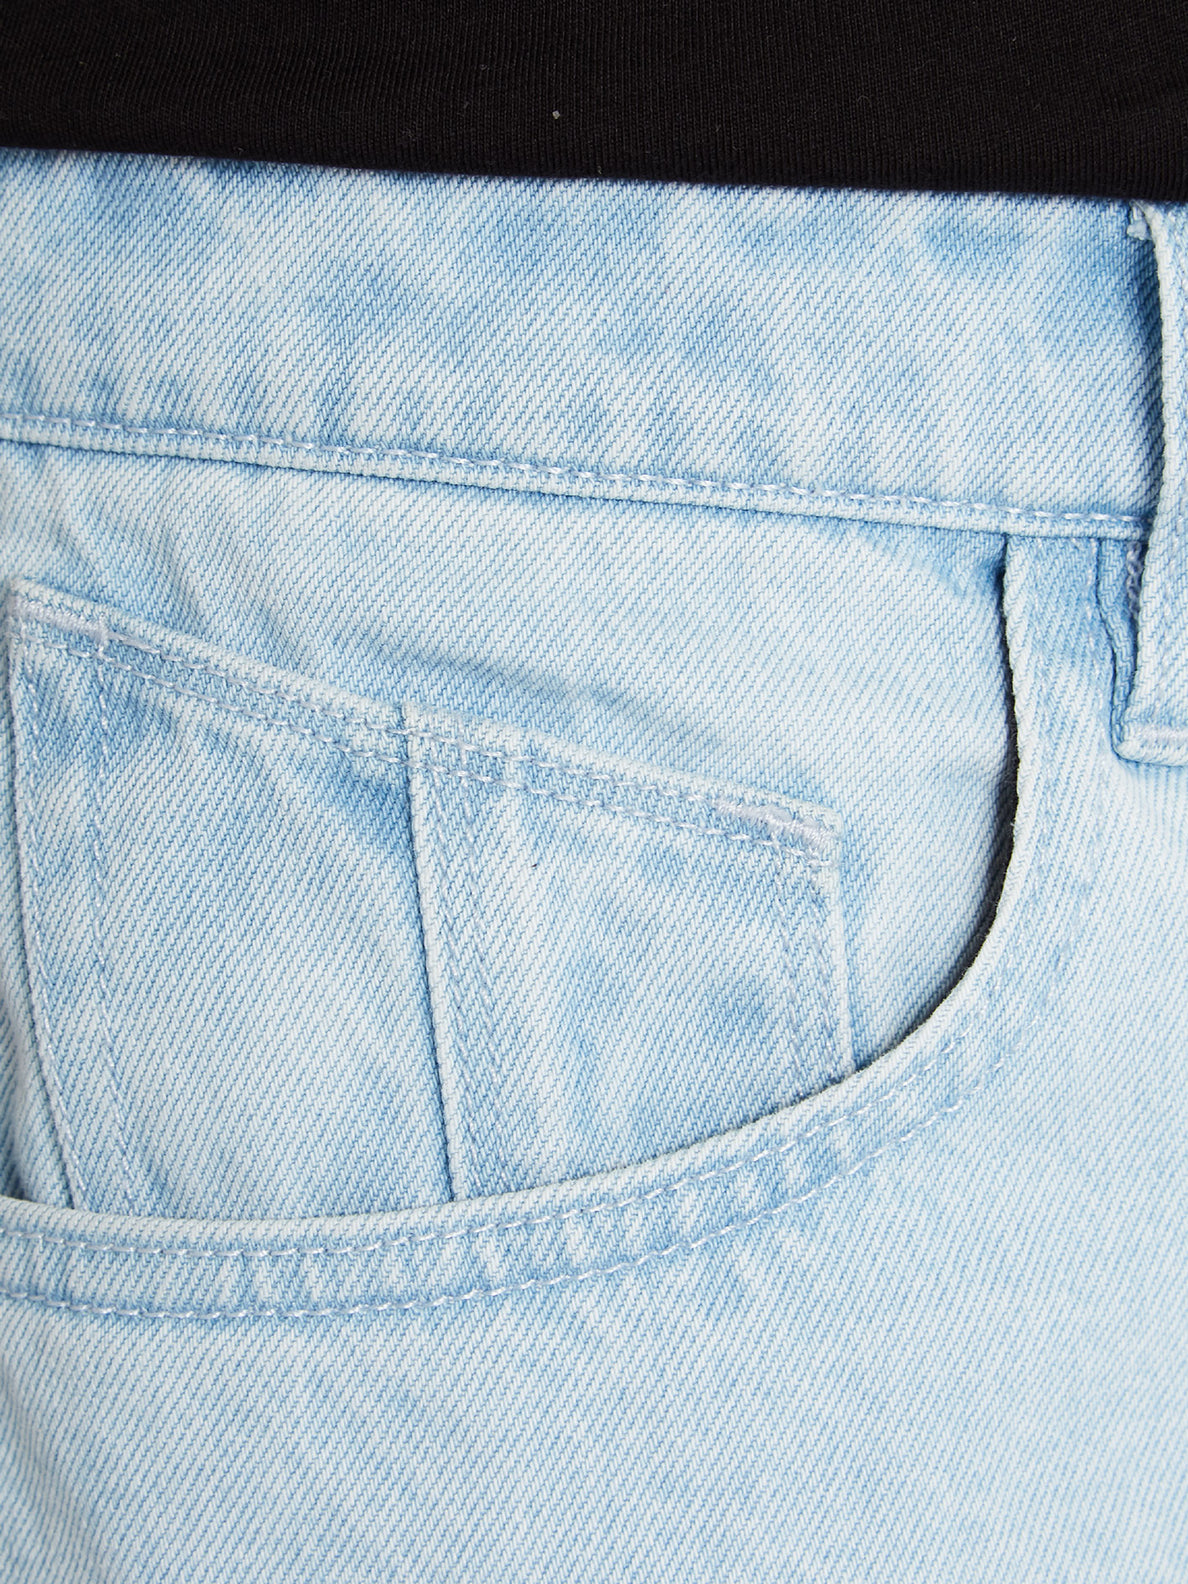 Billow Jeans - BLU CHIARO (A1932205_LBL) [6]